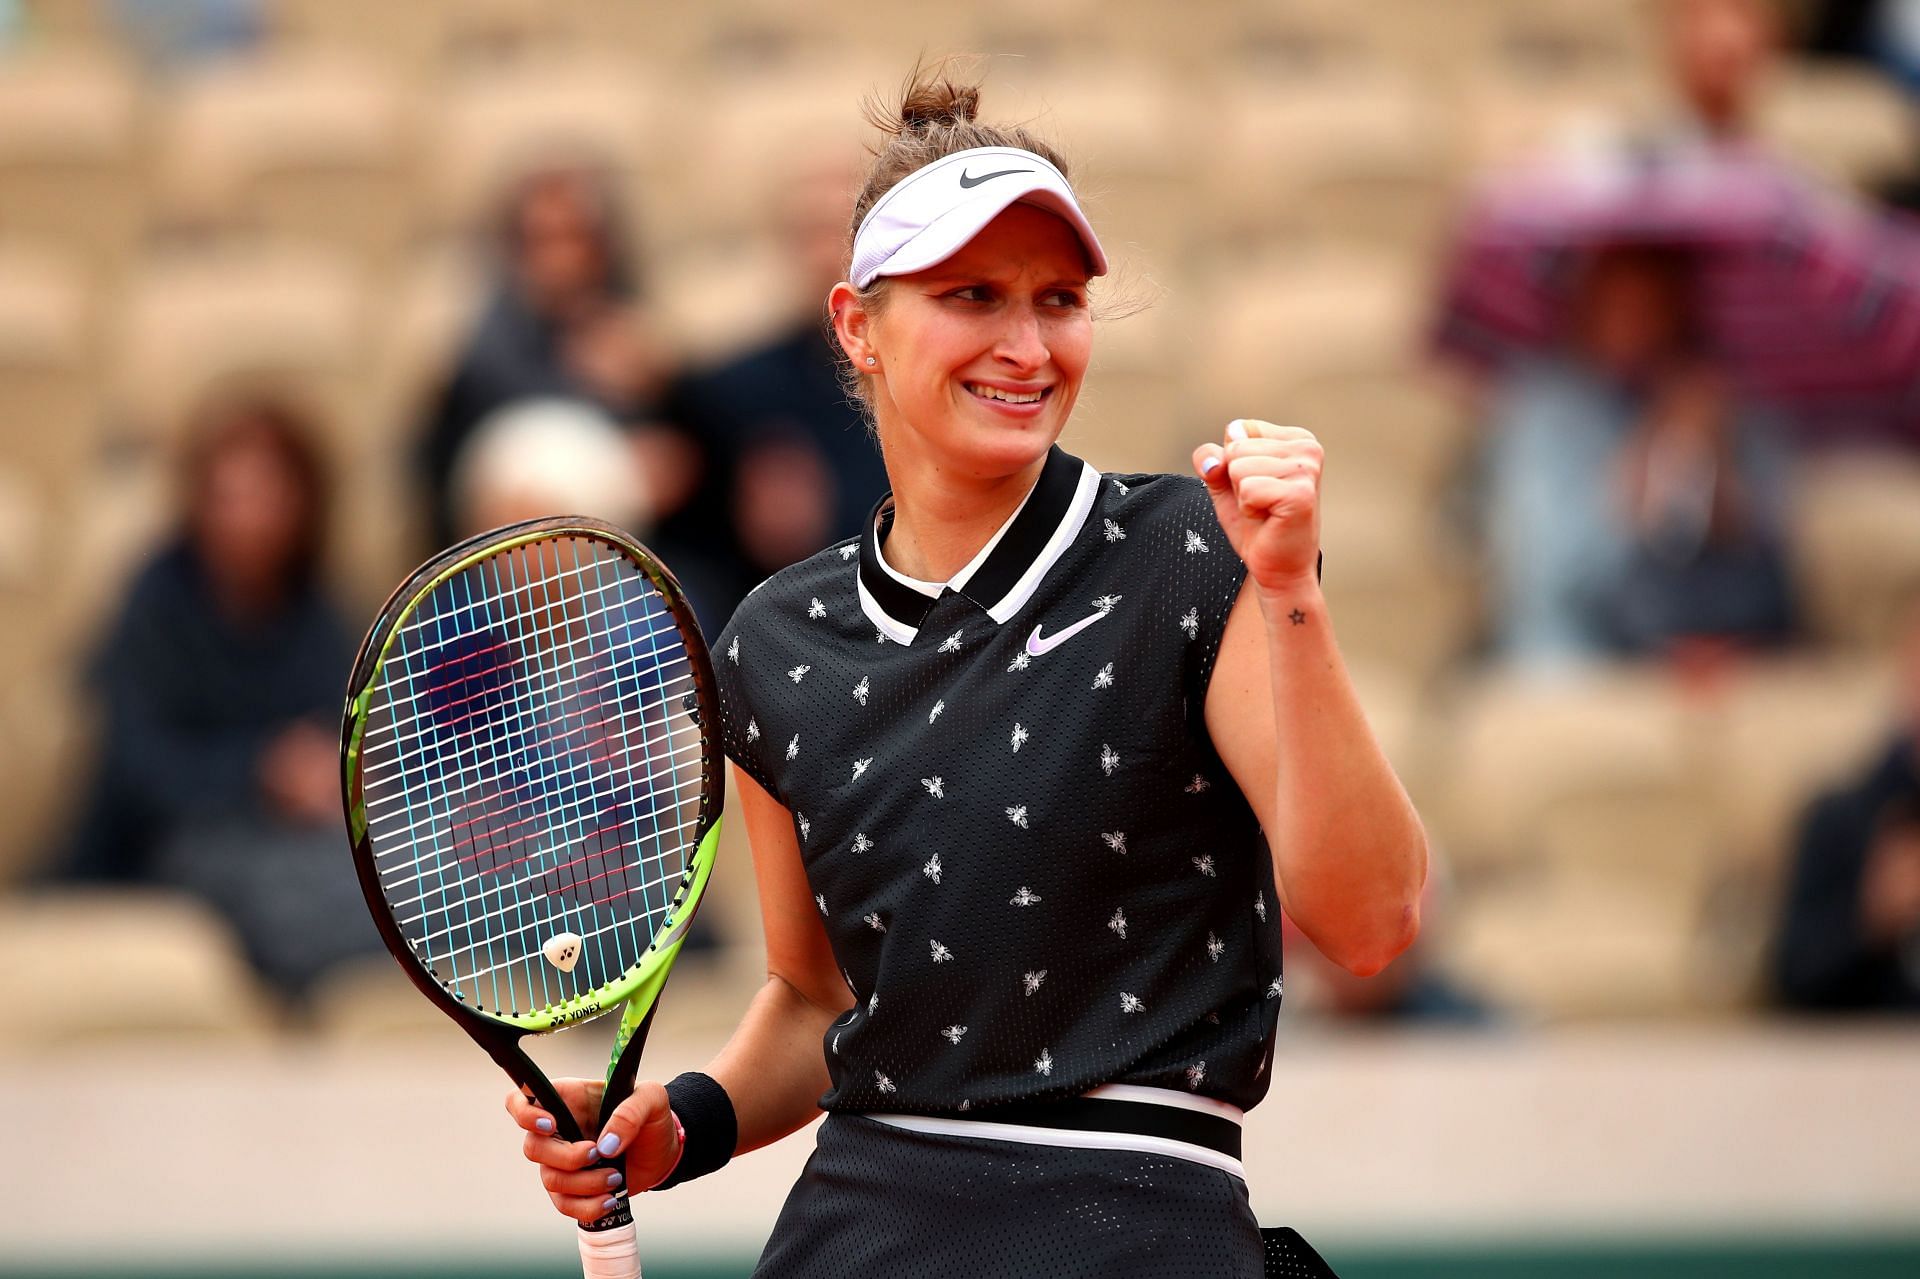 Marketa Vondrousova at the 2019 Roland Garros.